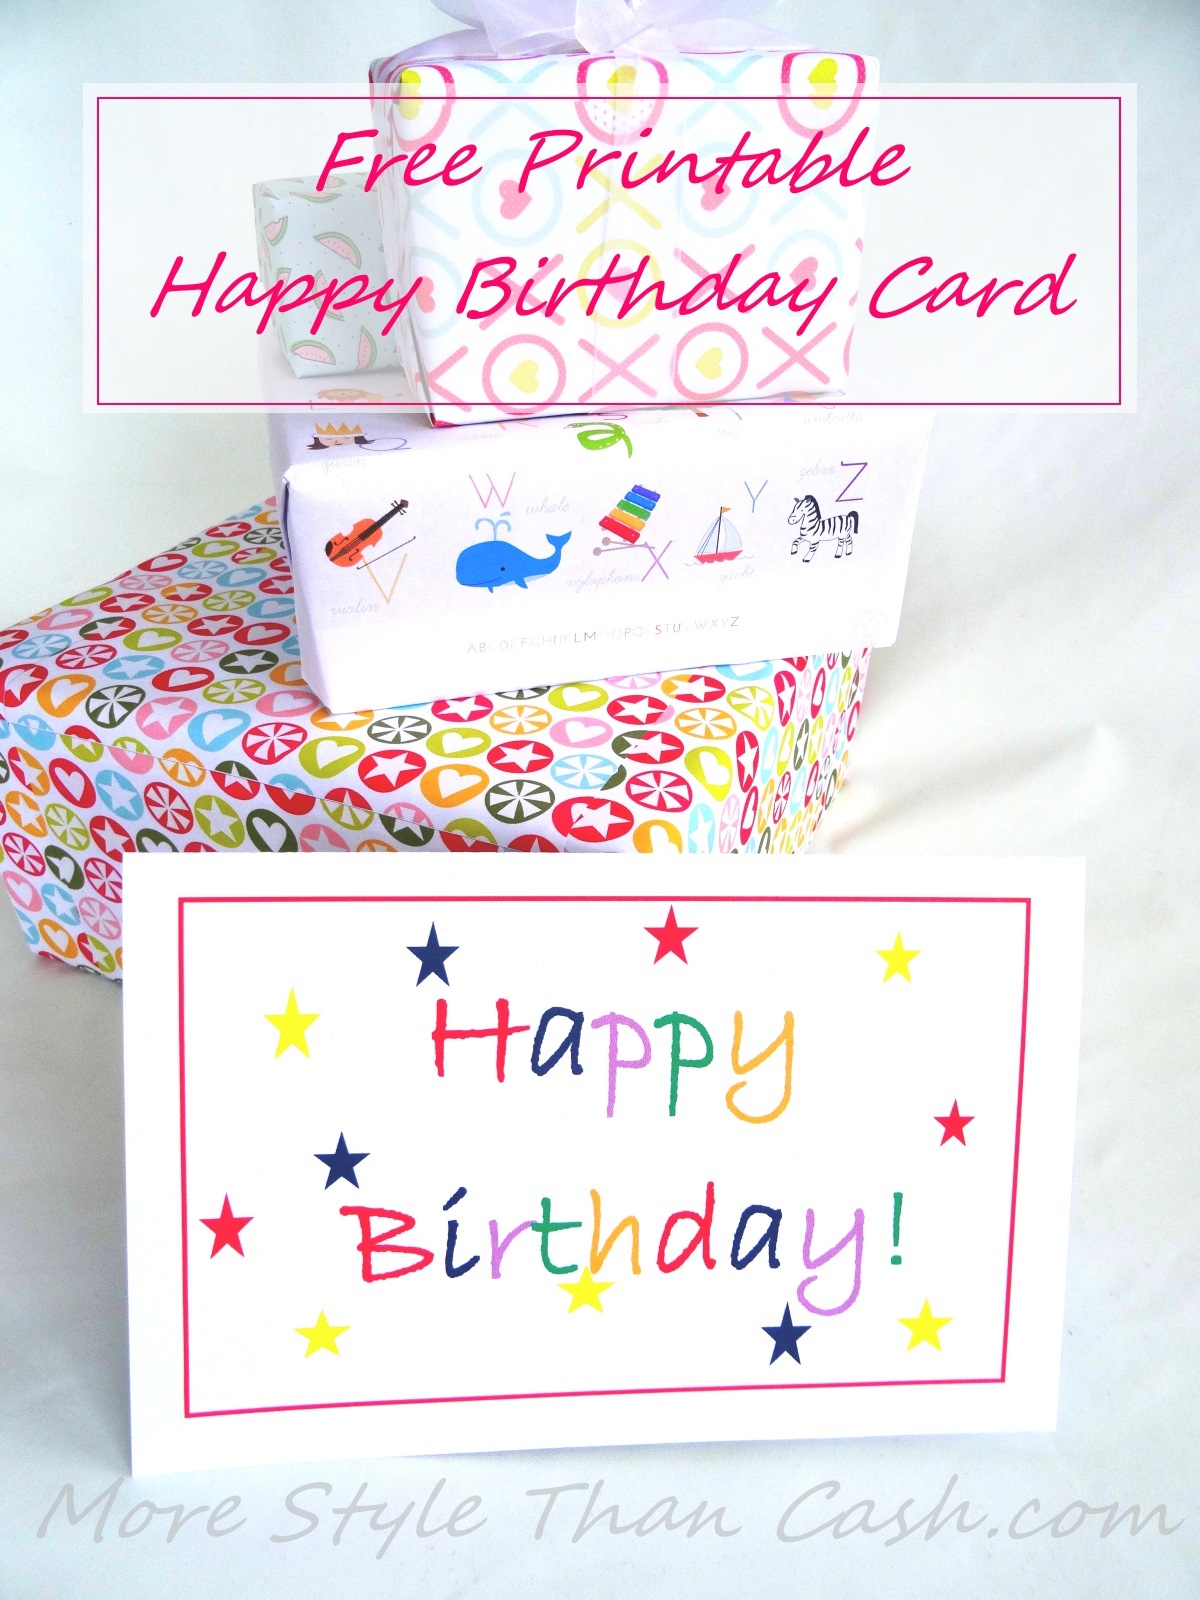 Free Printable Birthday Card - Free Printable Cards